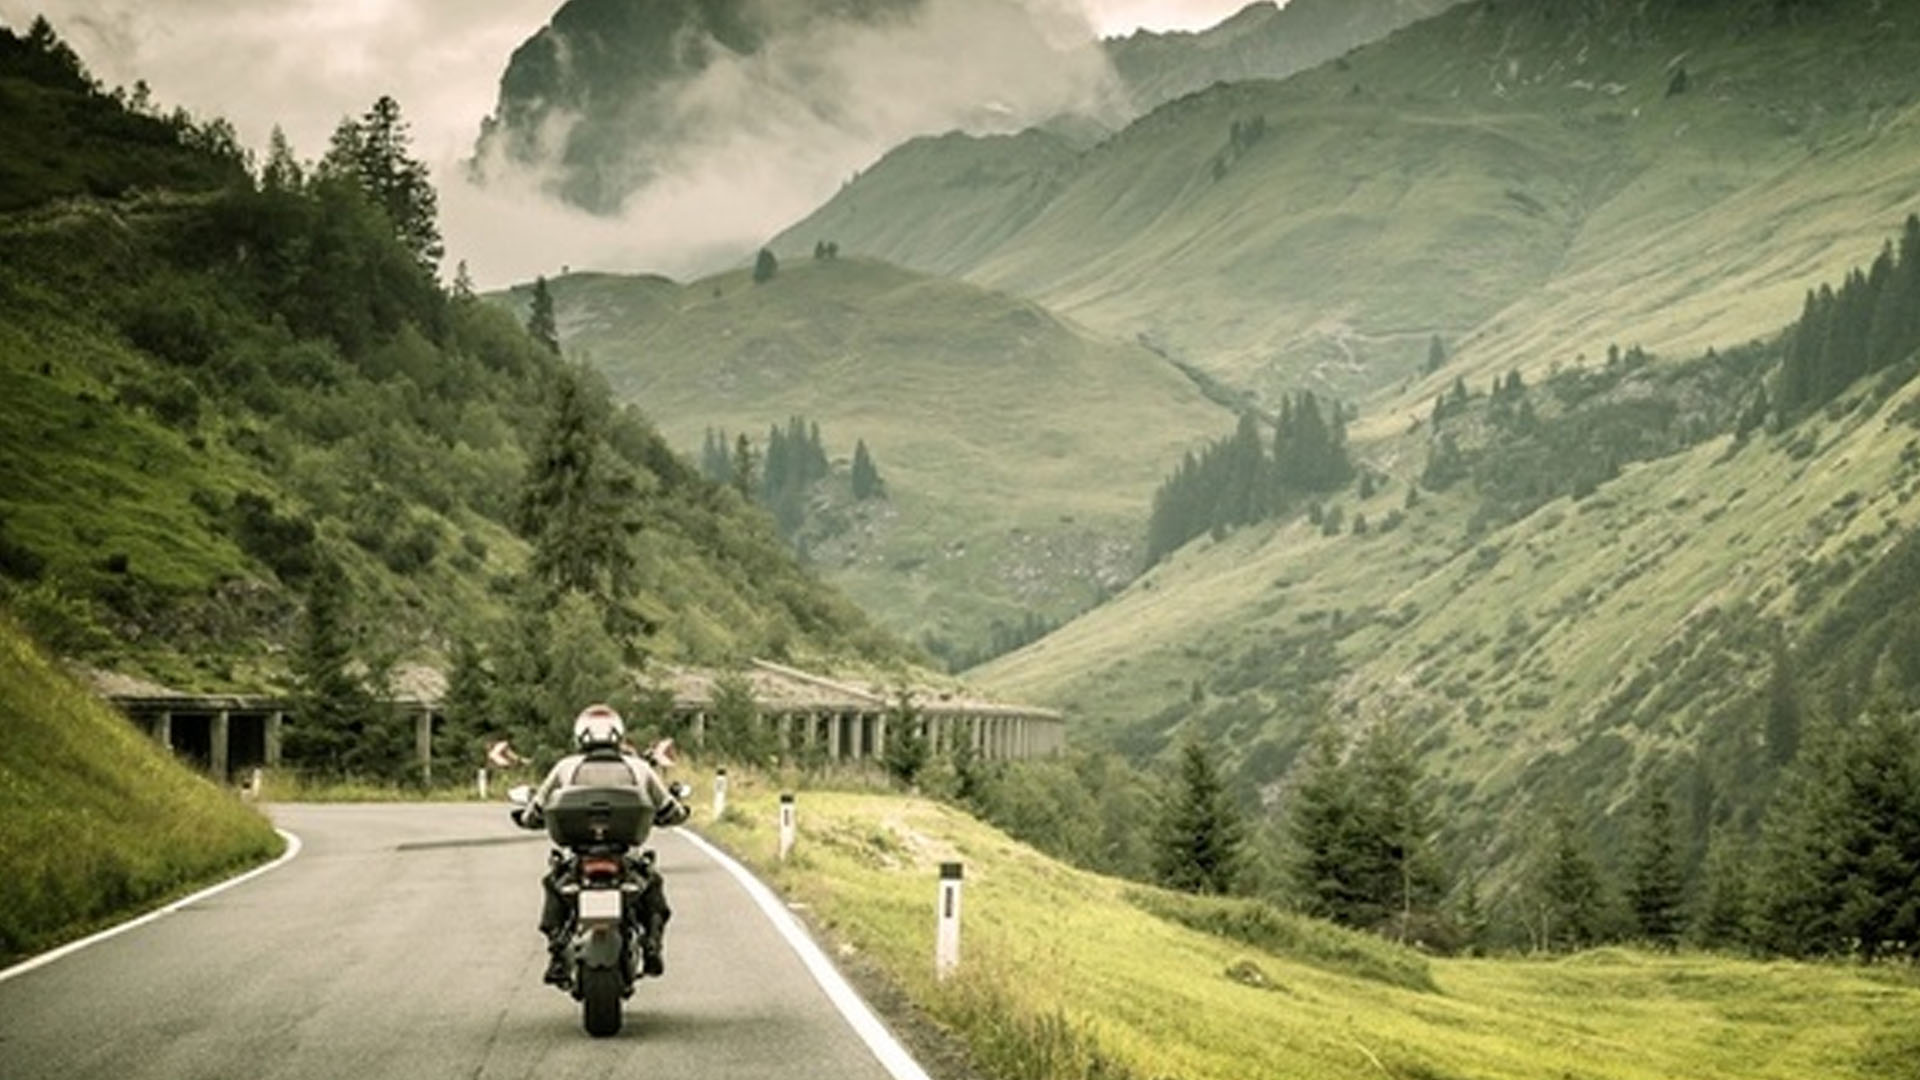 Motor Bikings in Himalayas